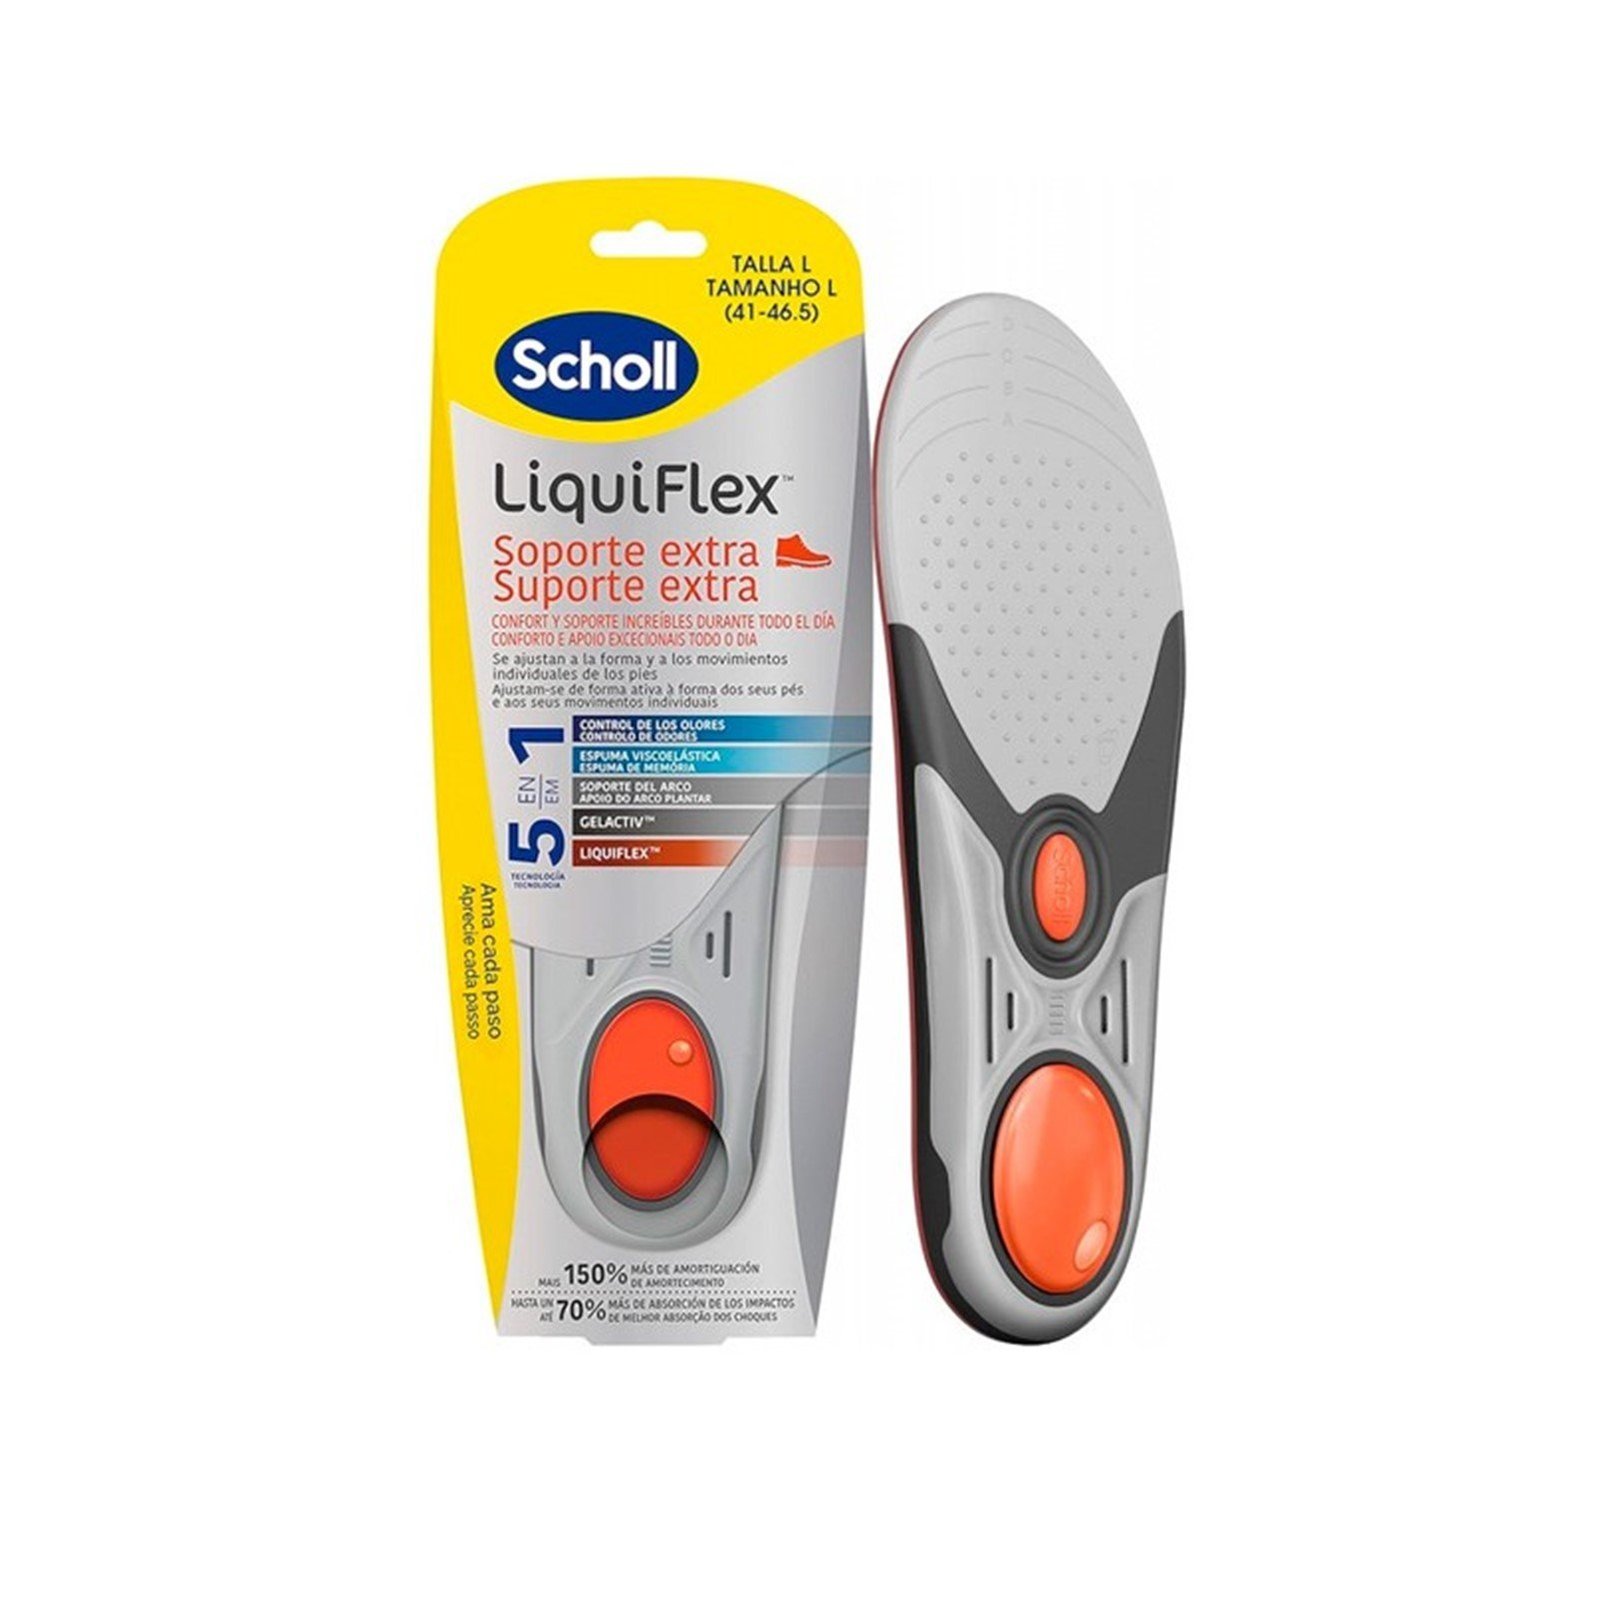 Scholl LiquiFlex 5-In-1 Extra Support Insoles L x2